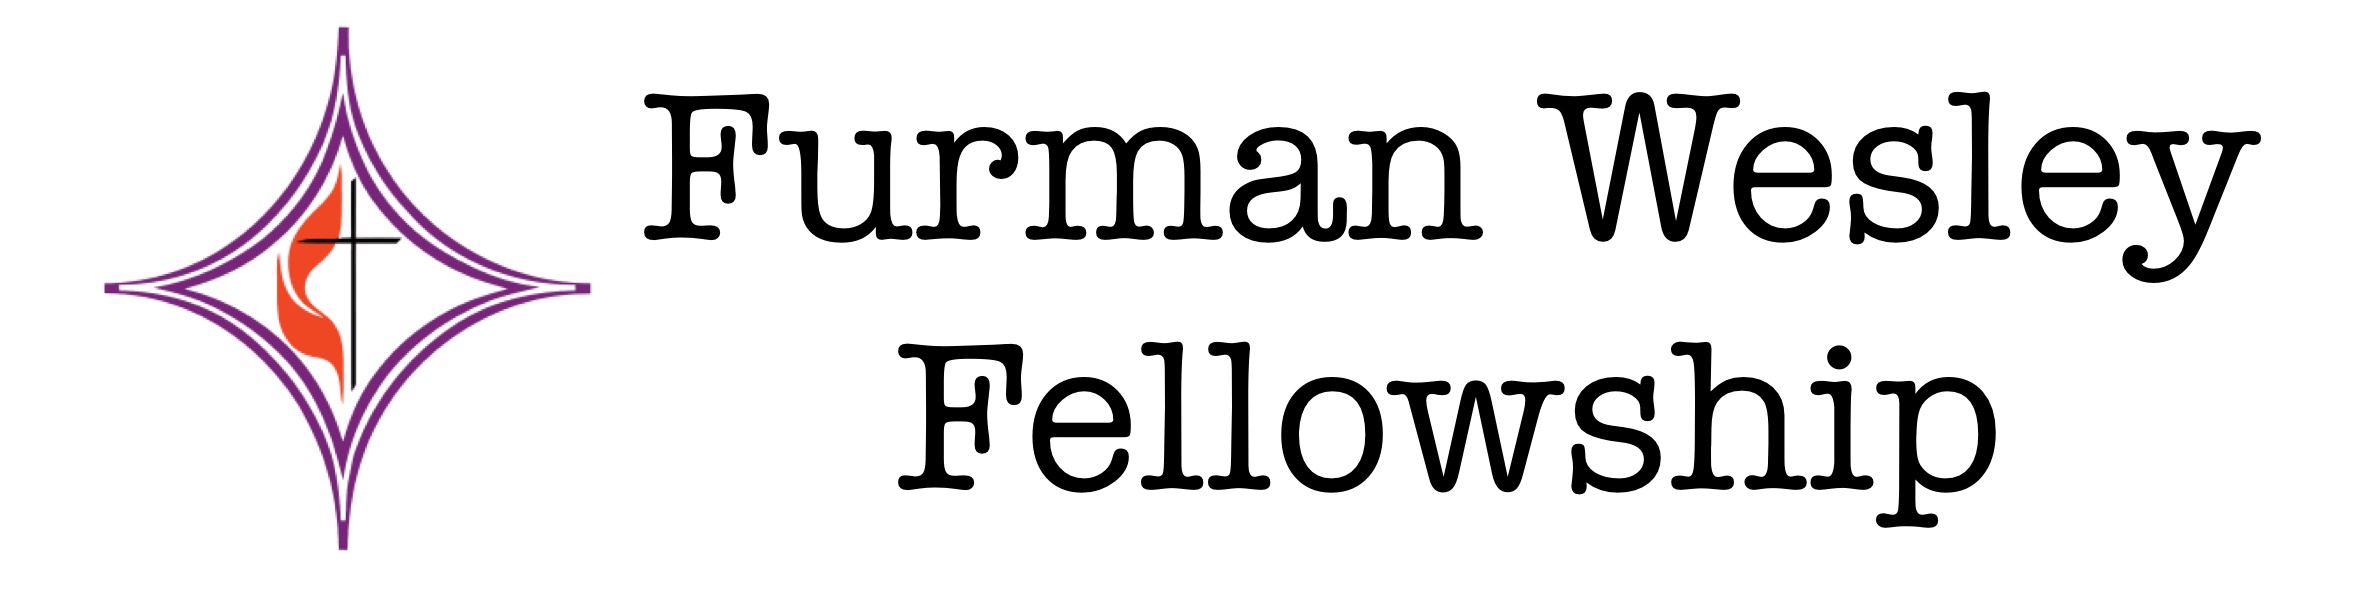 Furman Wesley Fellowship logo